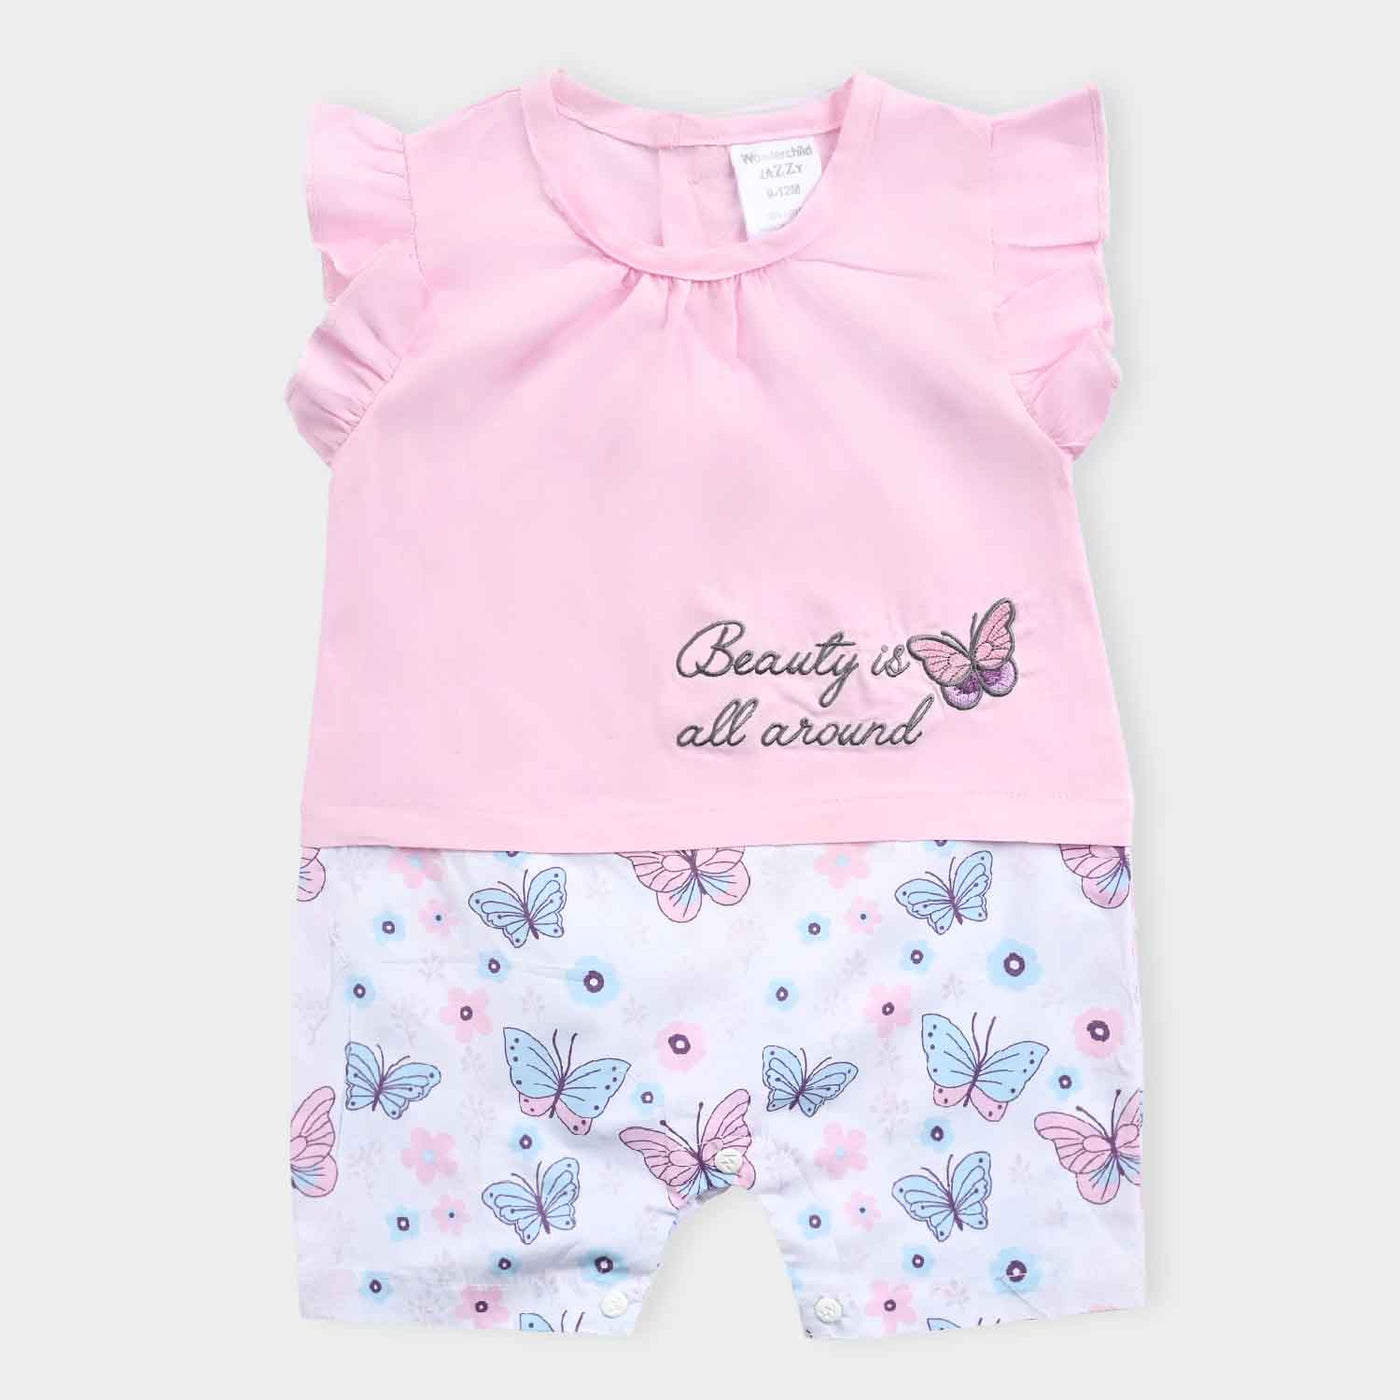 Infant Girls Cotton Interlock Romper-Pink/White